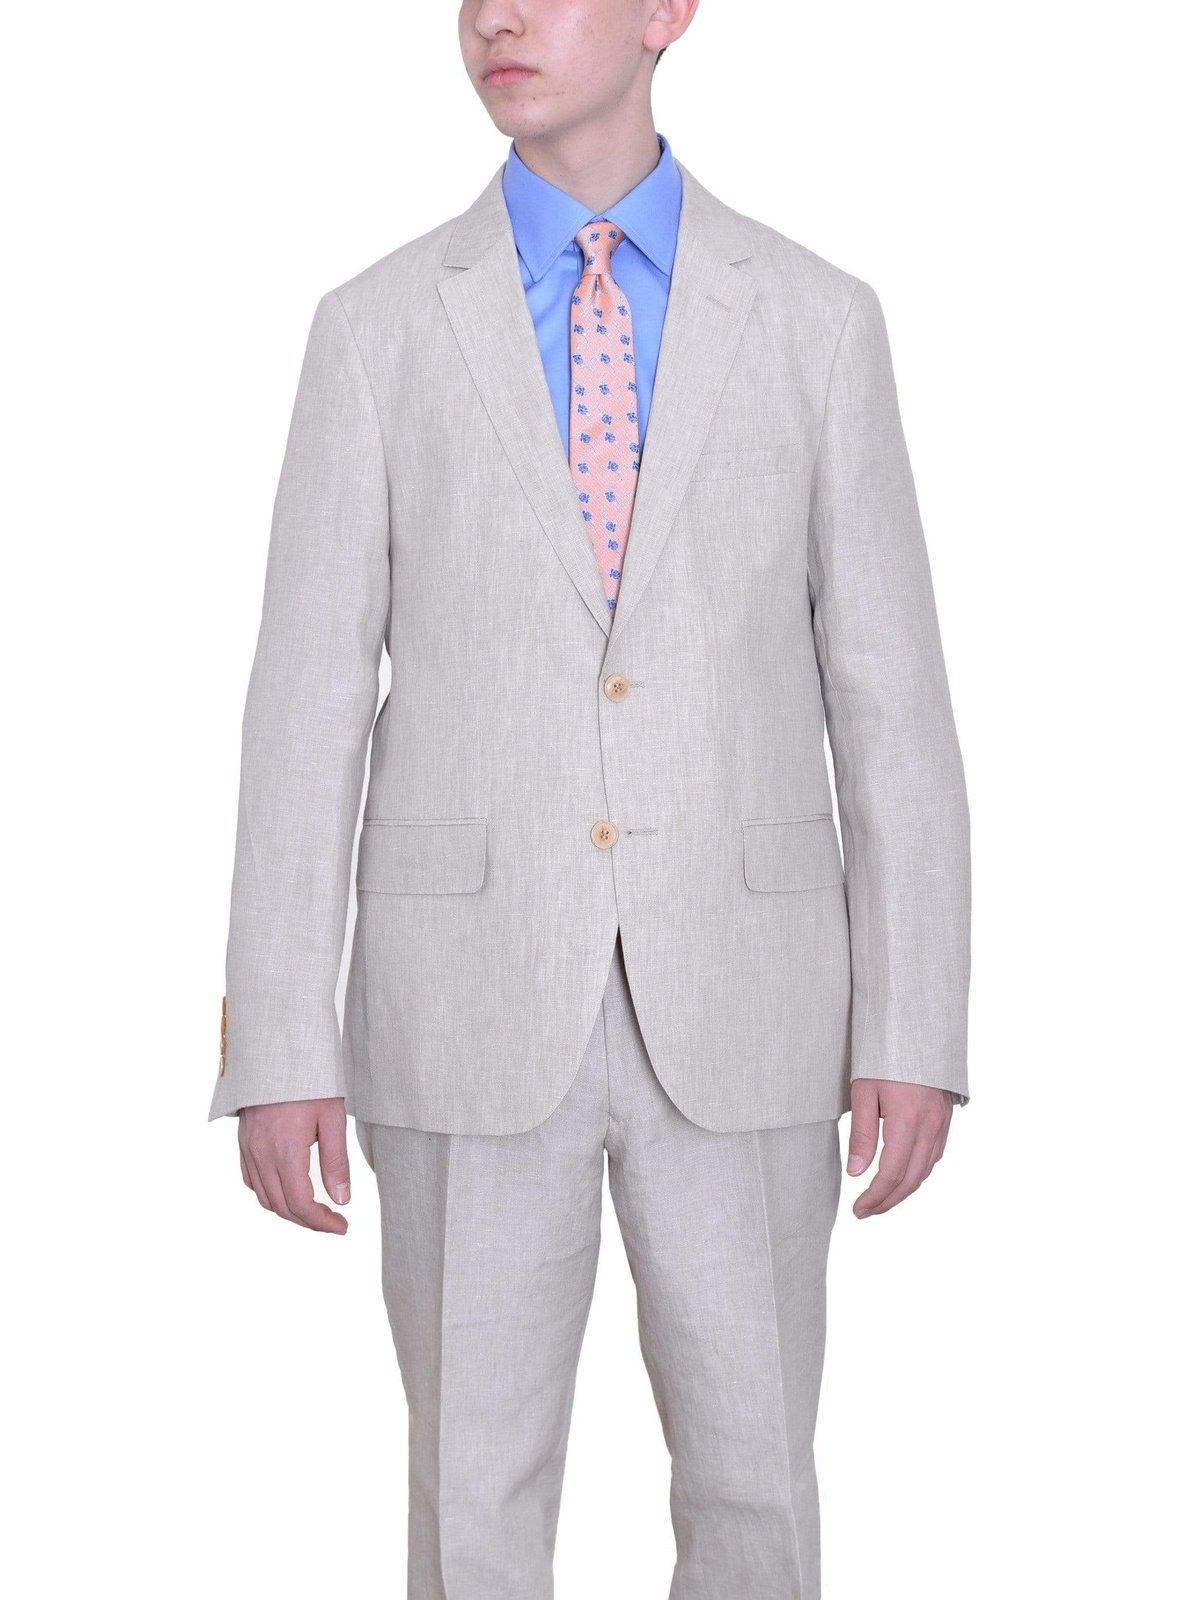 Label E TWO PIECE SUITS 44R Mens Modern Fit Beige Textured Two Button Linen Suit